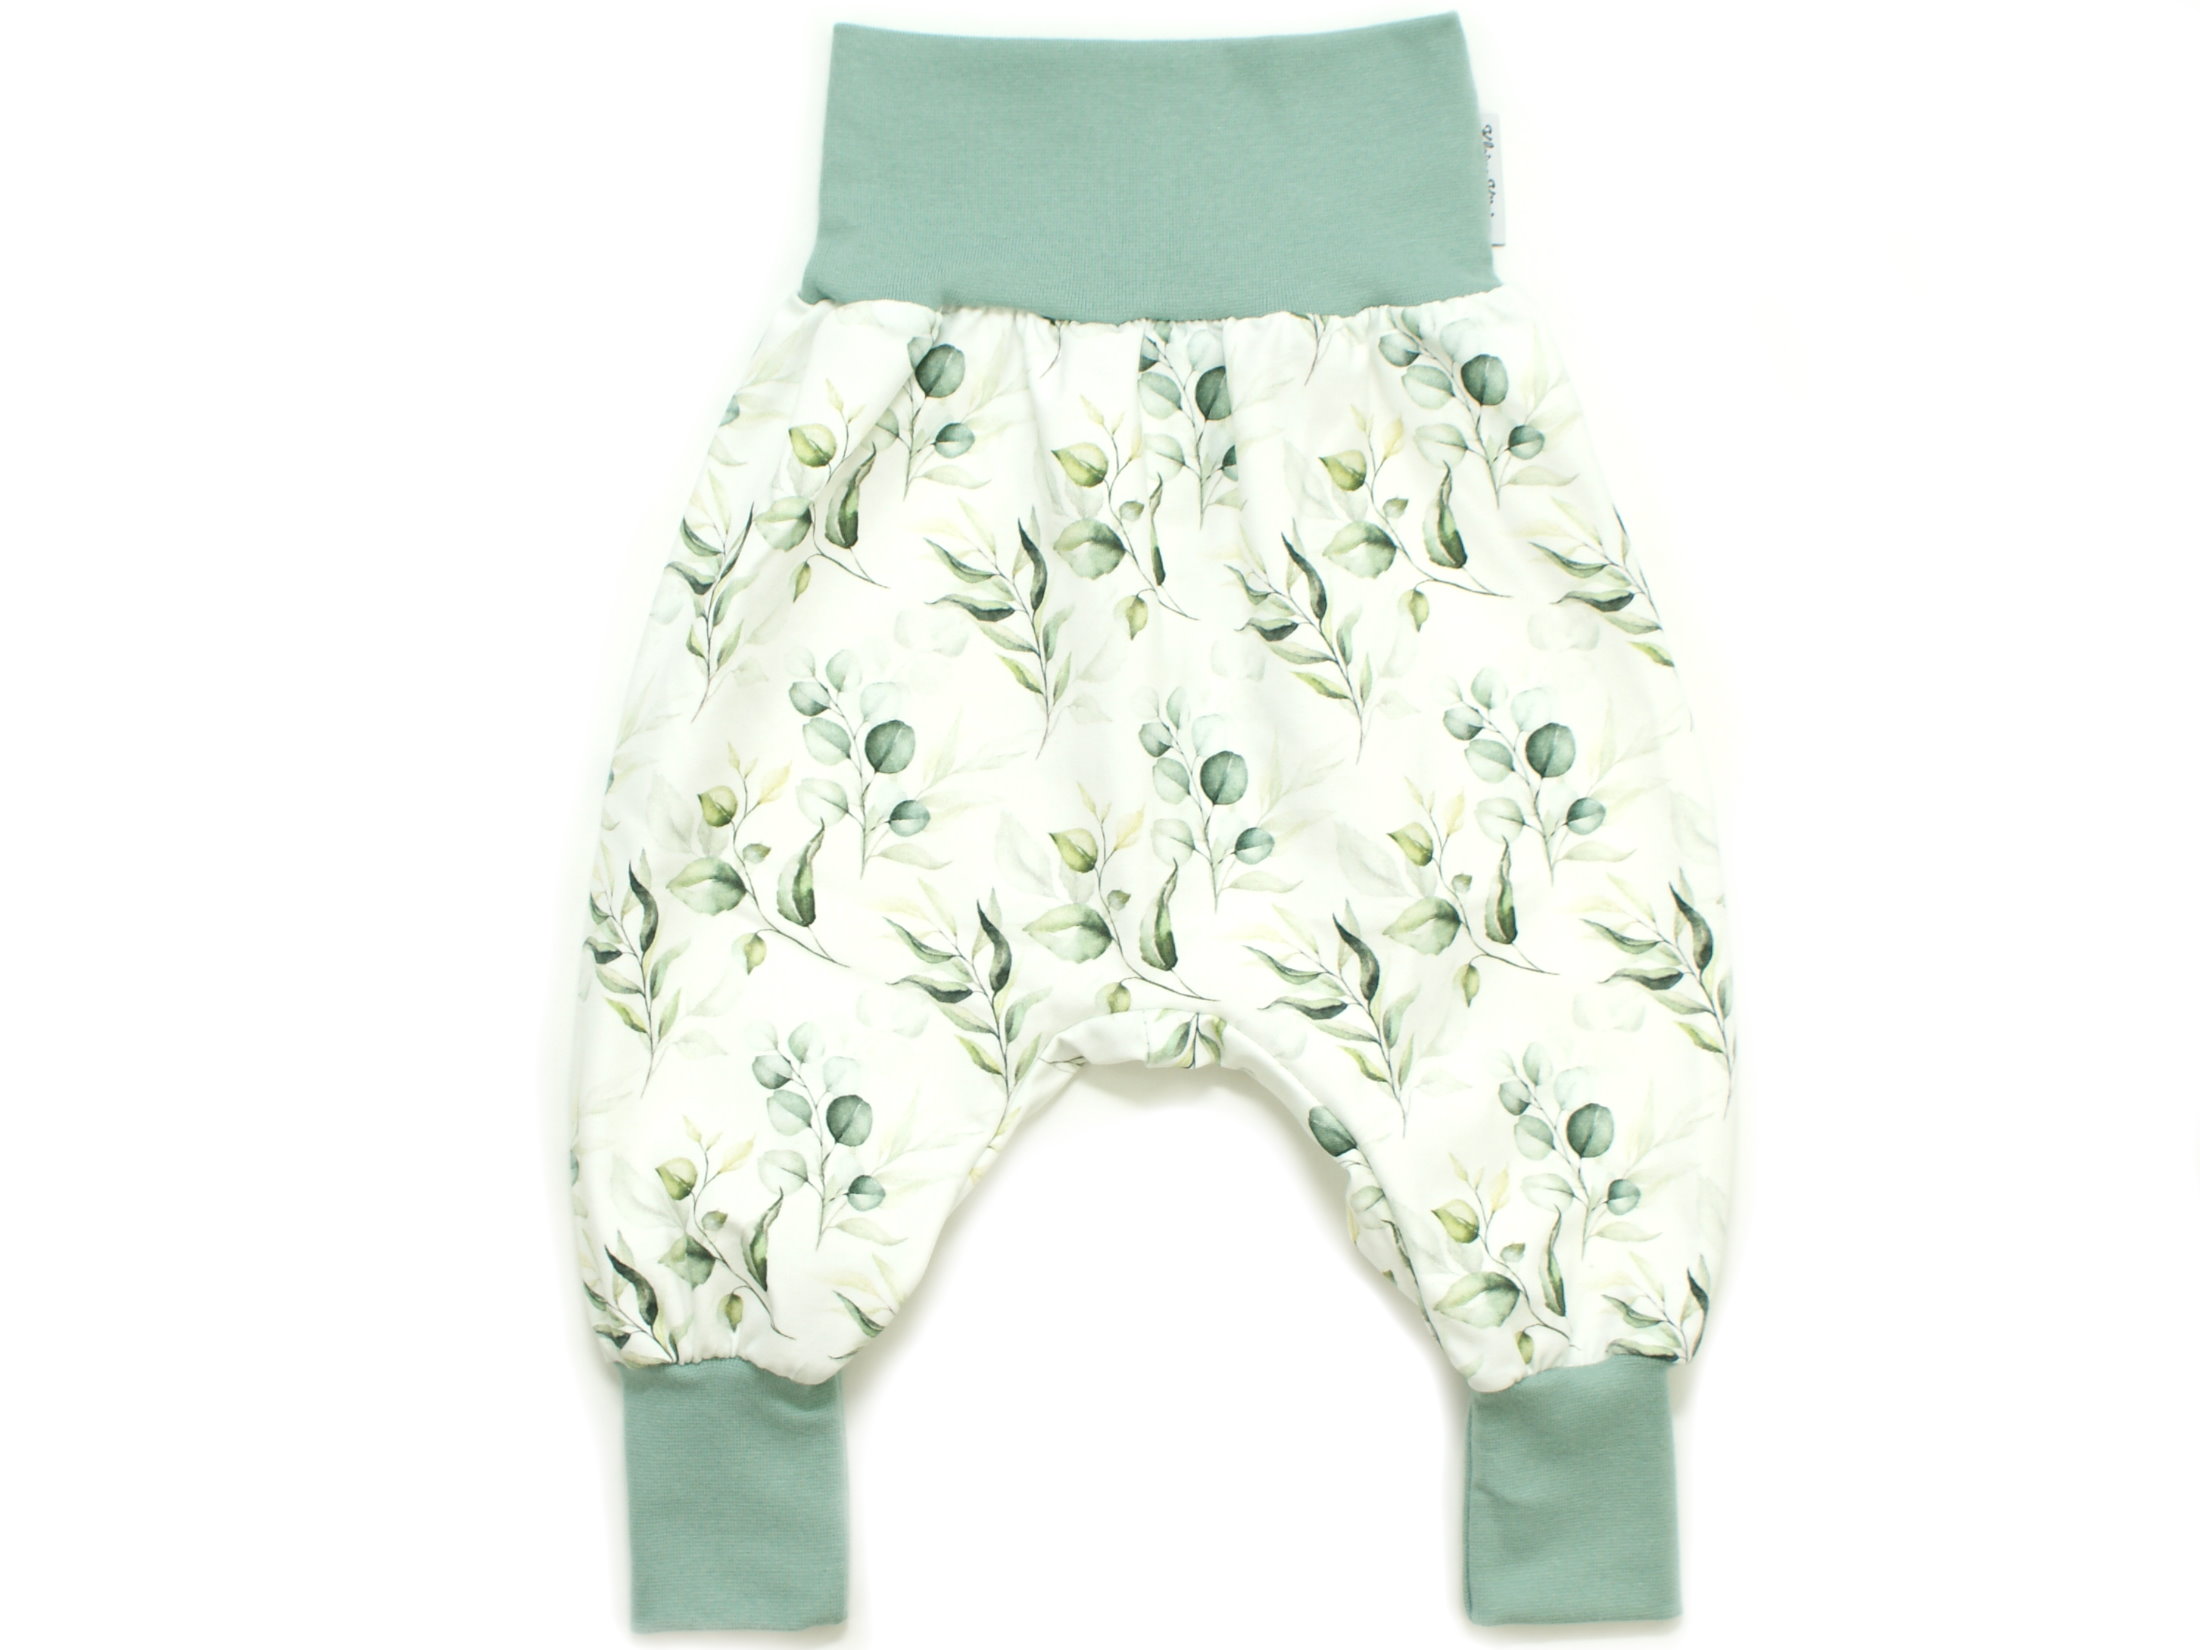 Kleine Könige Kurze Pumphose Baby Jungen Shorts · Modell Äffchen türkis braun · Ökotex 100 Zertifiziert · Größen 50-152